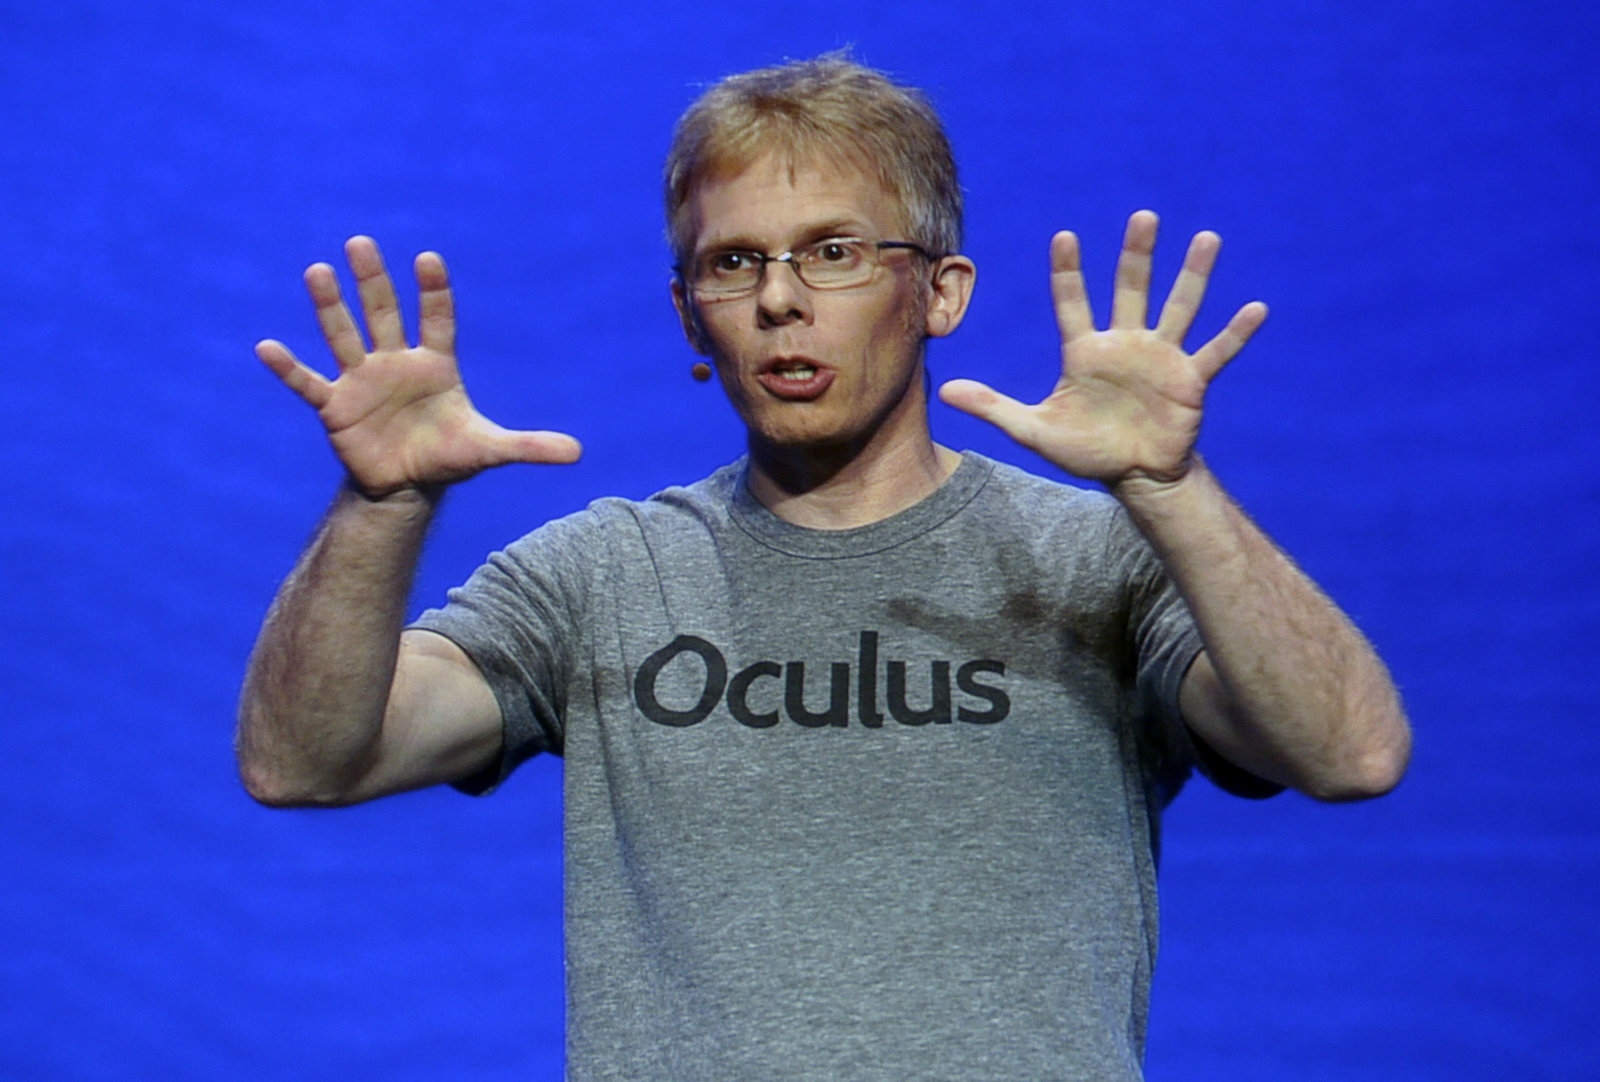 John Carmack takes a step back at Oculus to work on human-like AI | DeviceDaily.com